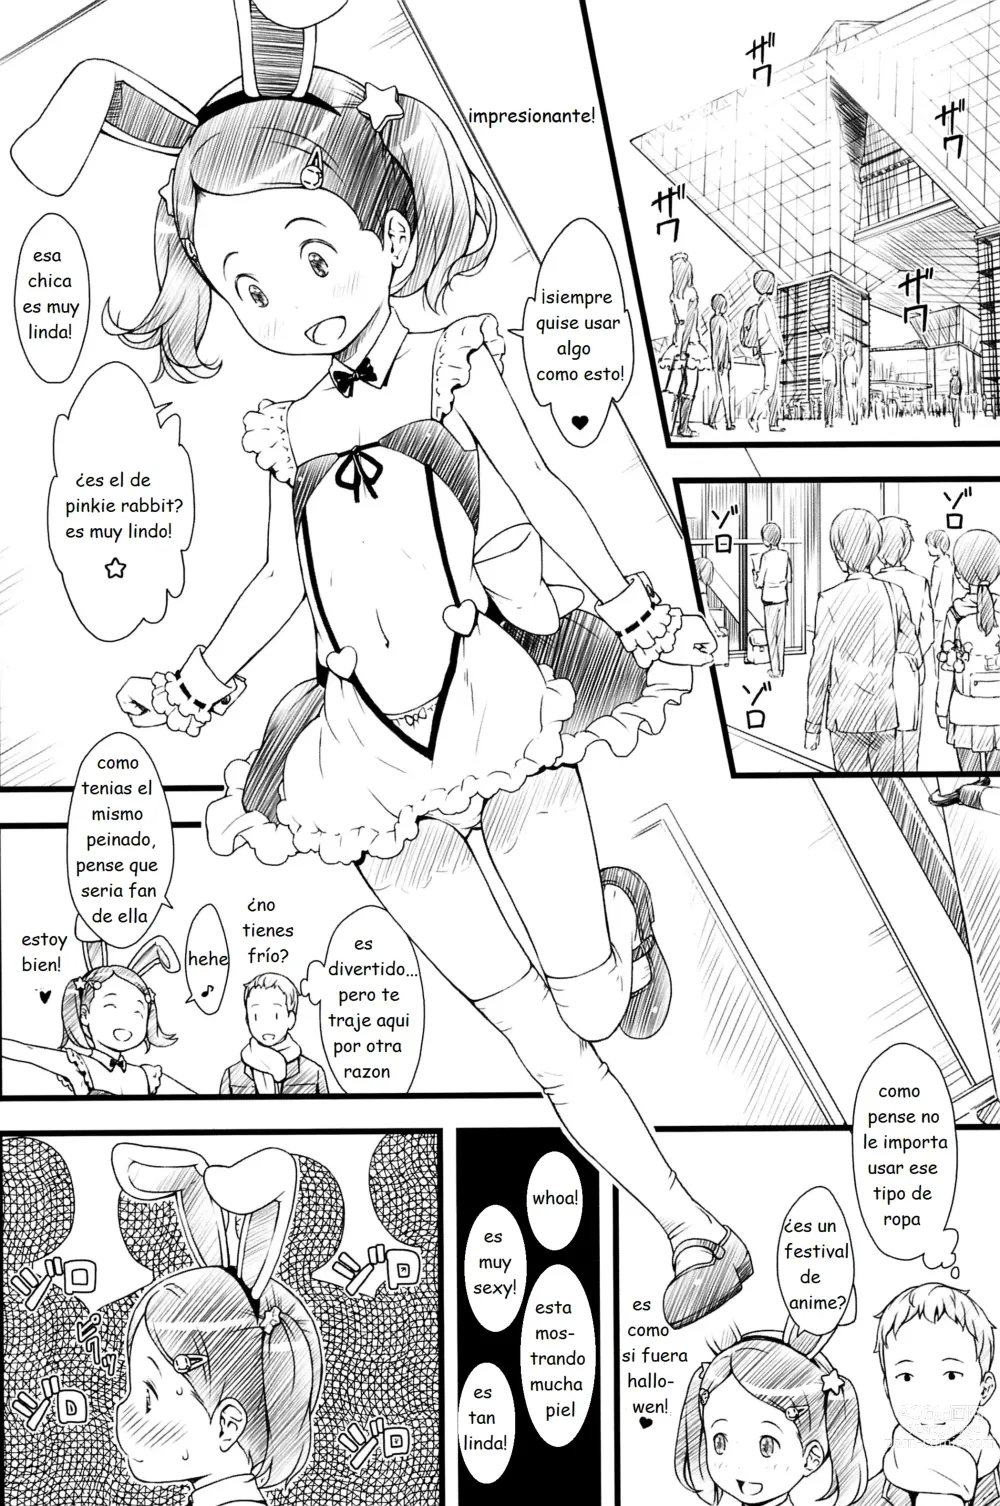 Page 5 of doujinshi focus